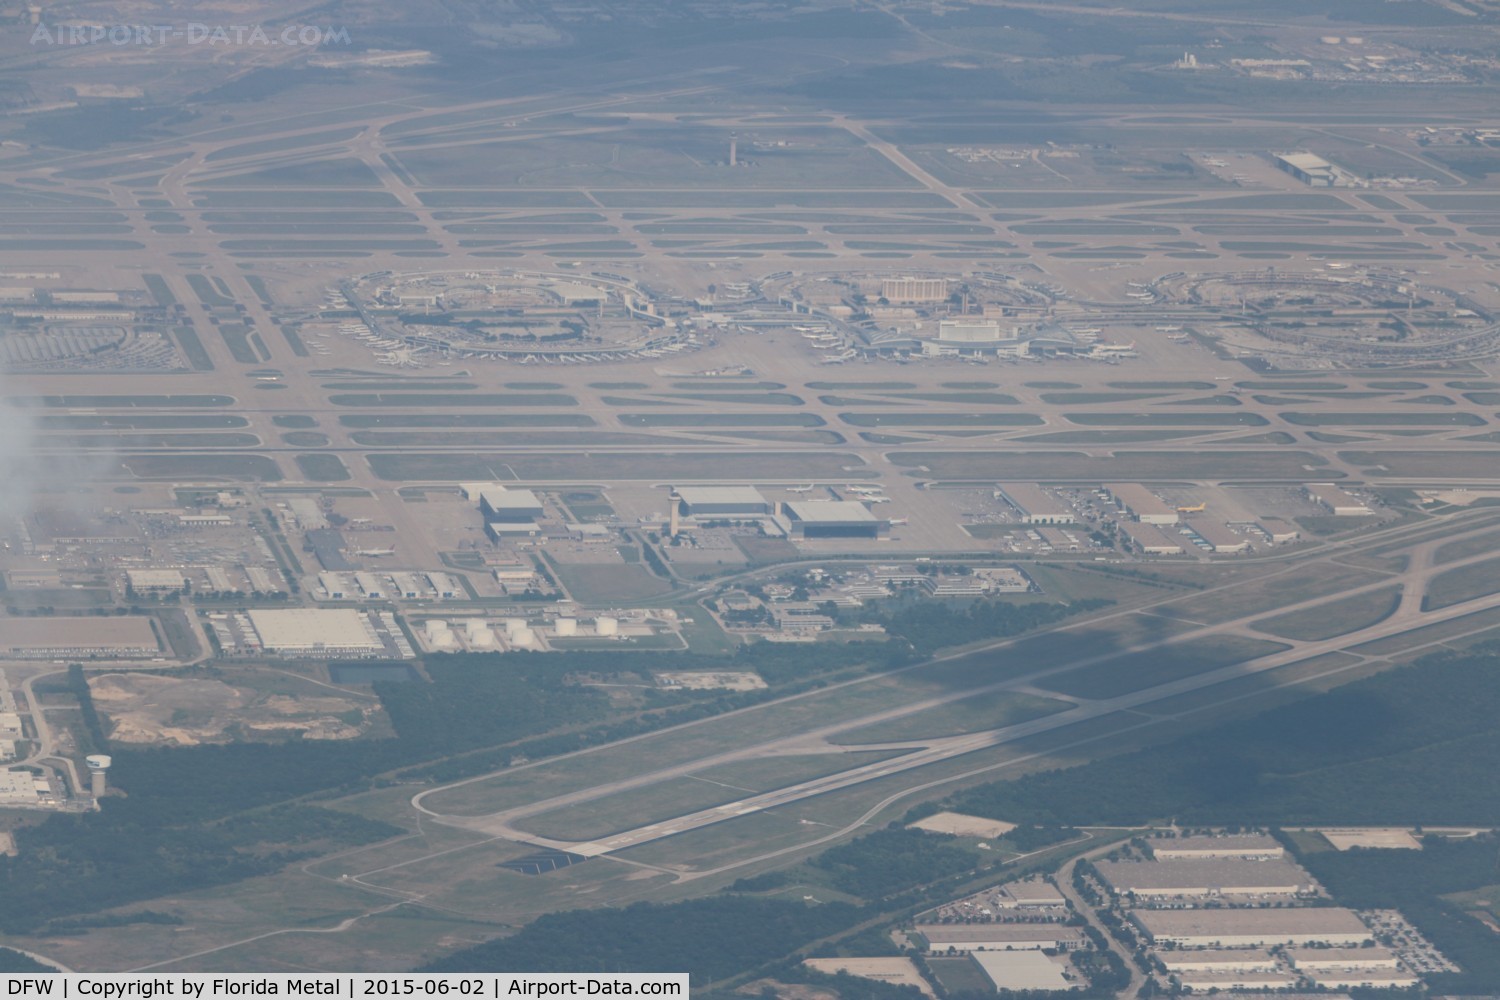 Dallas/fort Worth International Airport (DFW) - Dallas Fort Worth on downwind